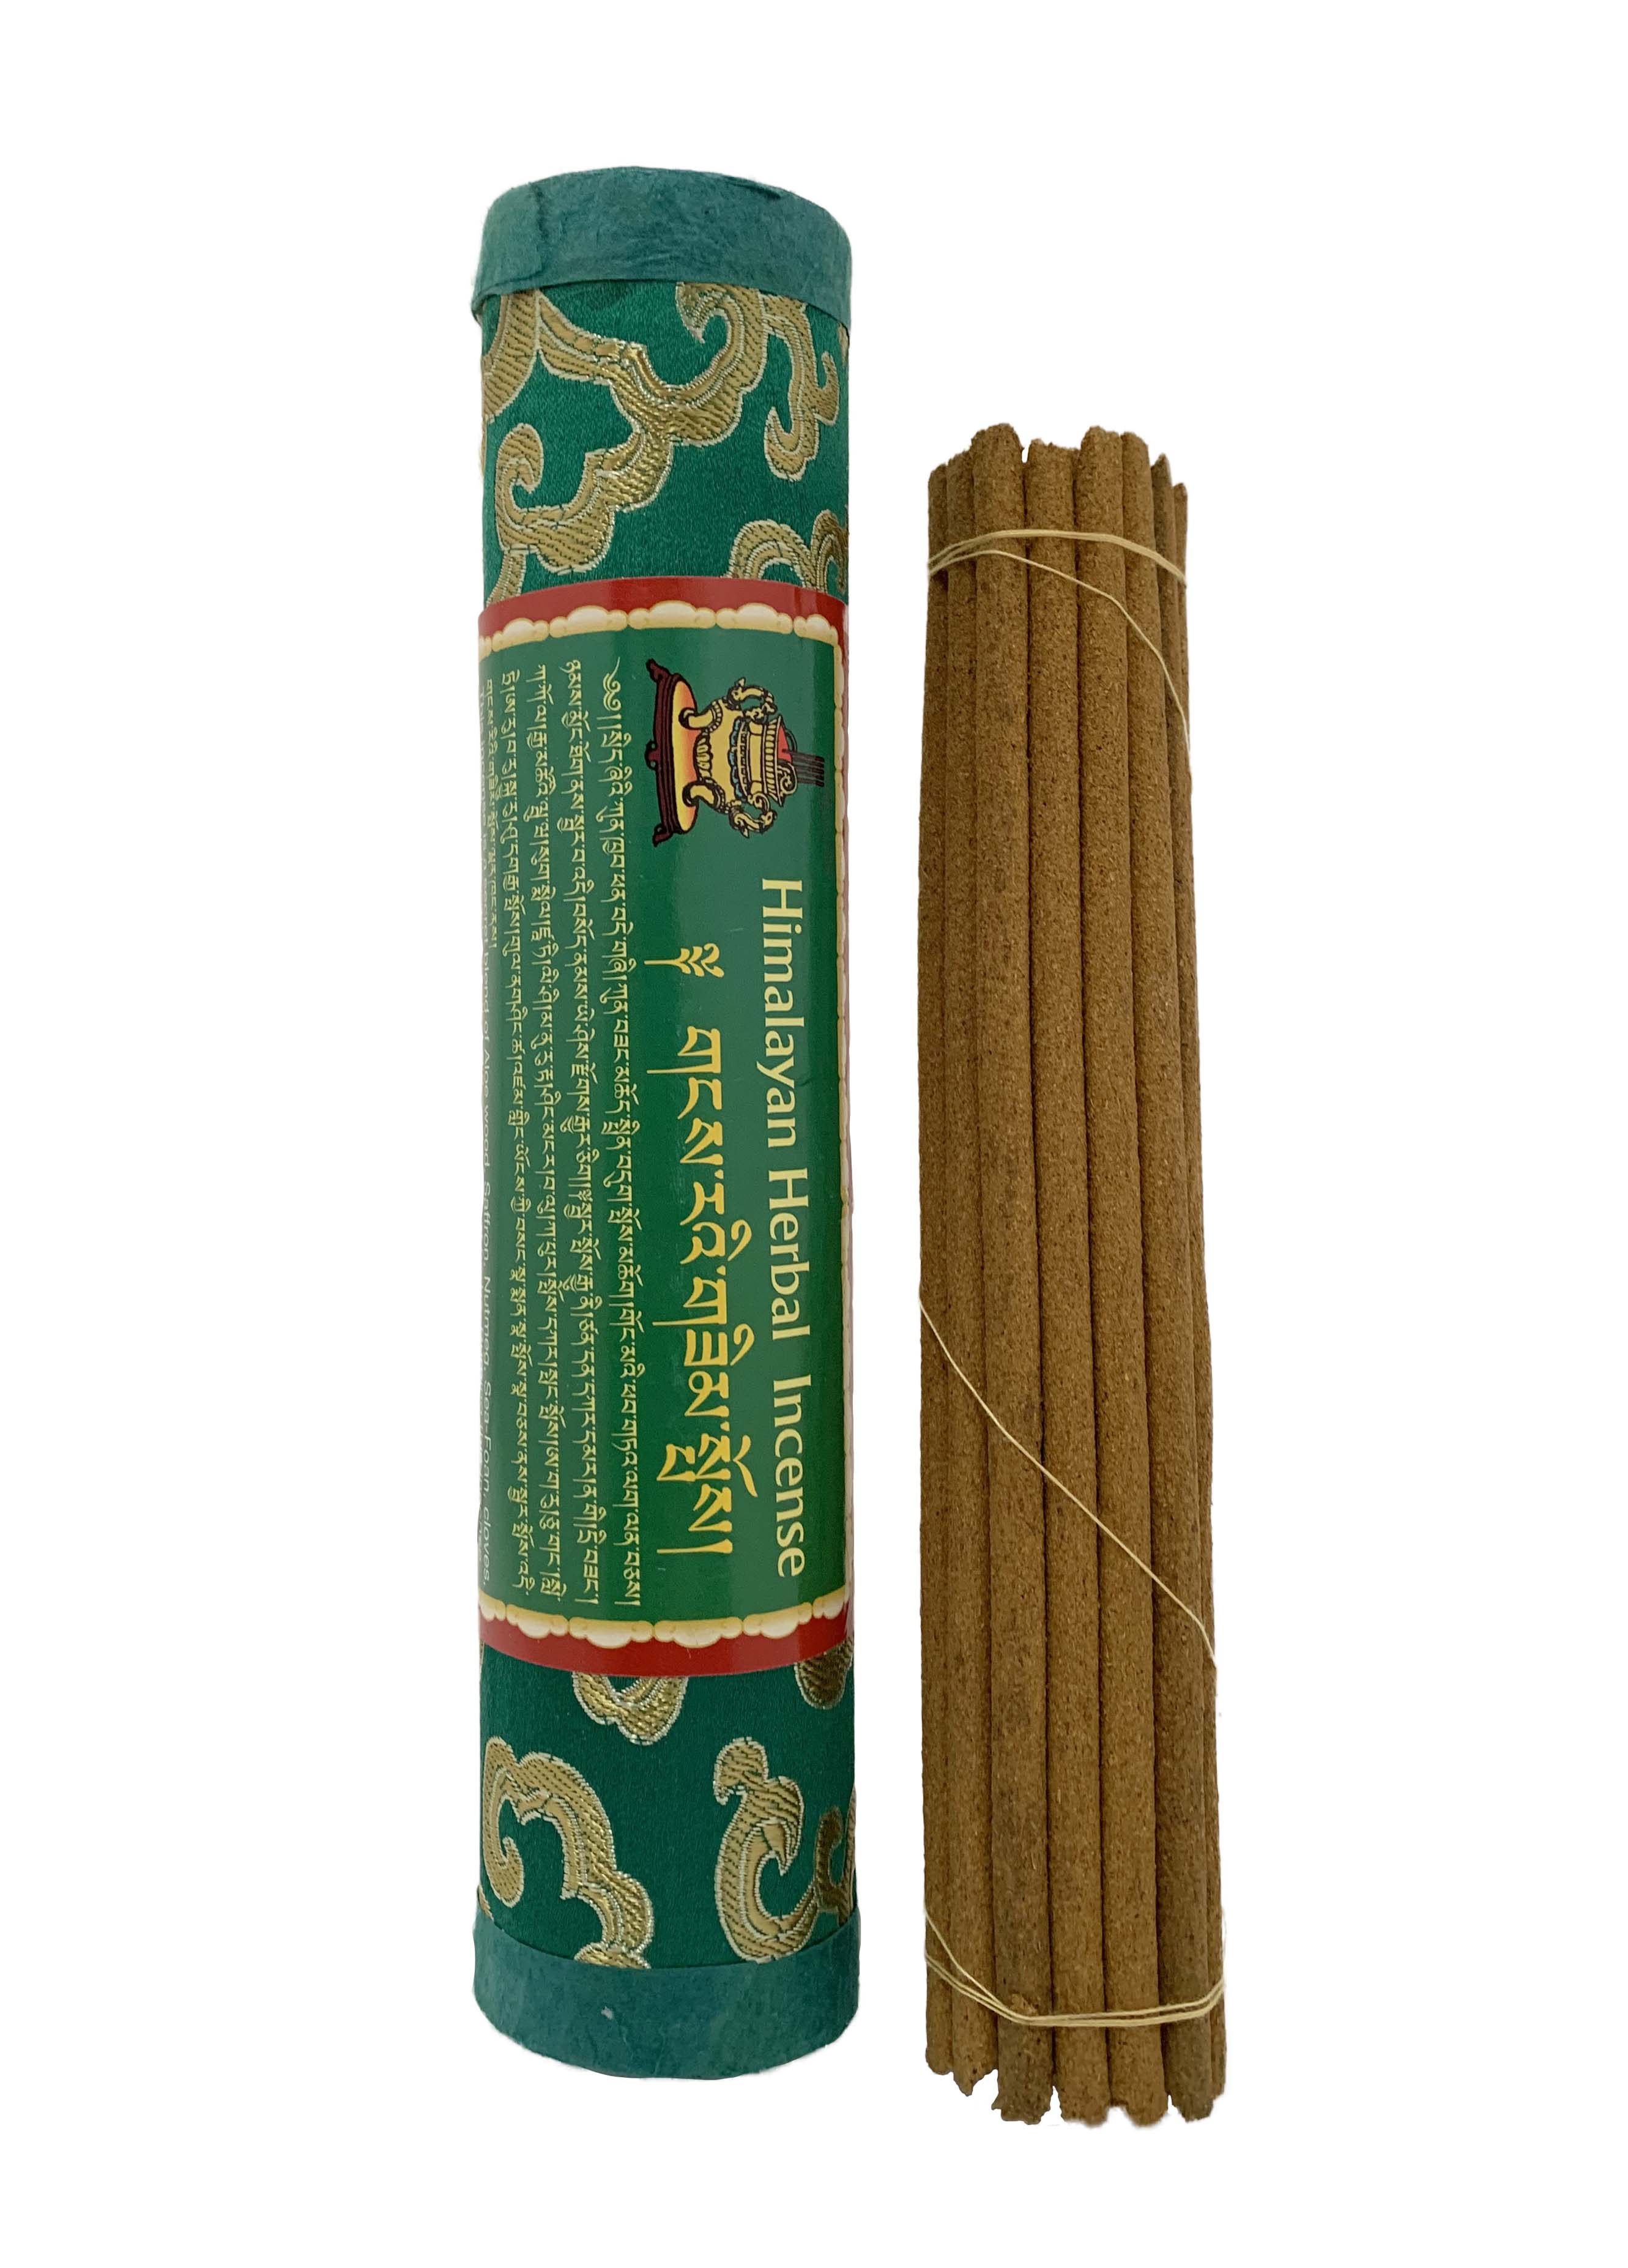 Himalayan Herbal Incense - Druk Sticks Green - 2 Pack